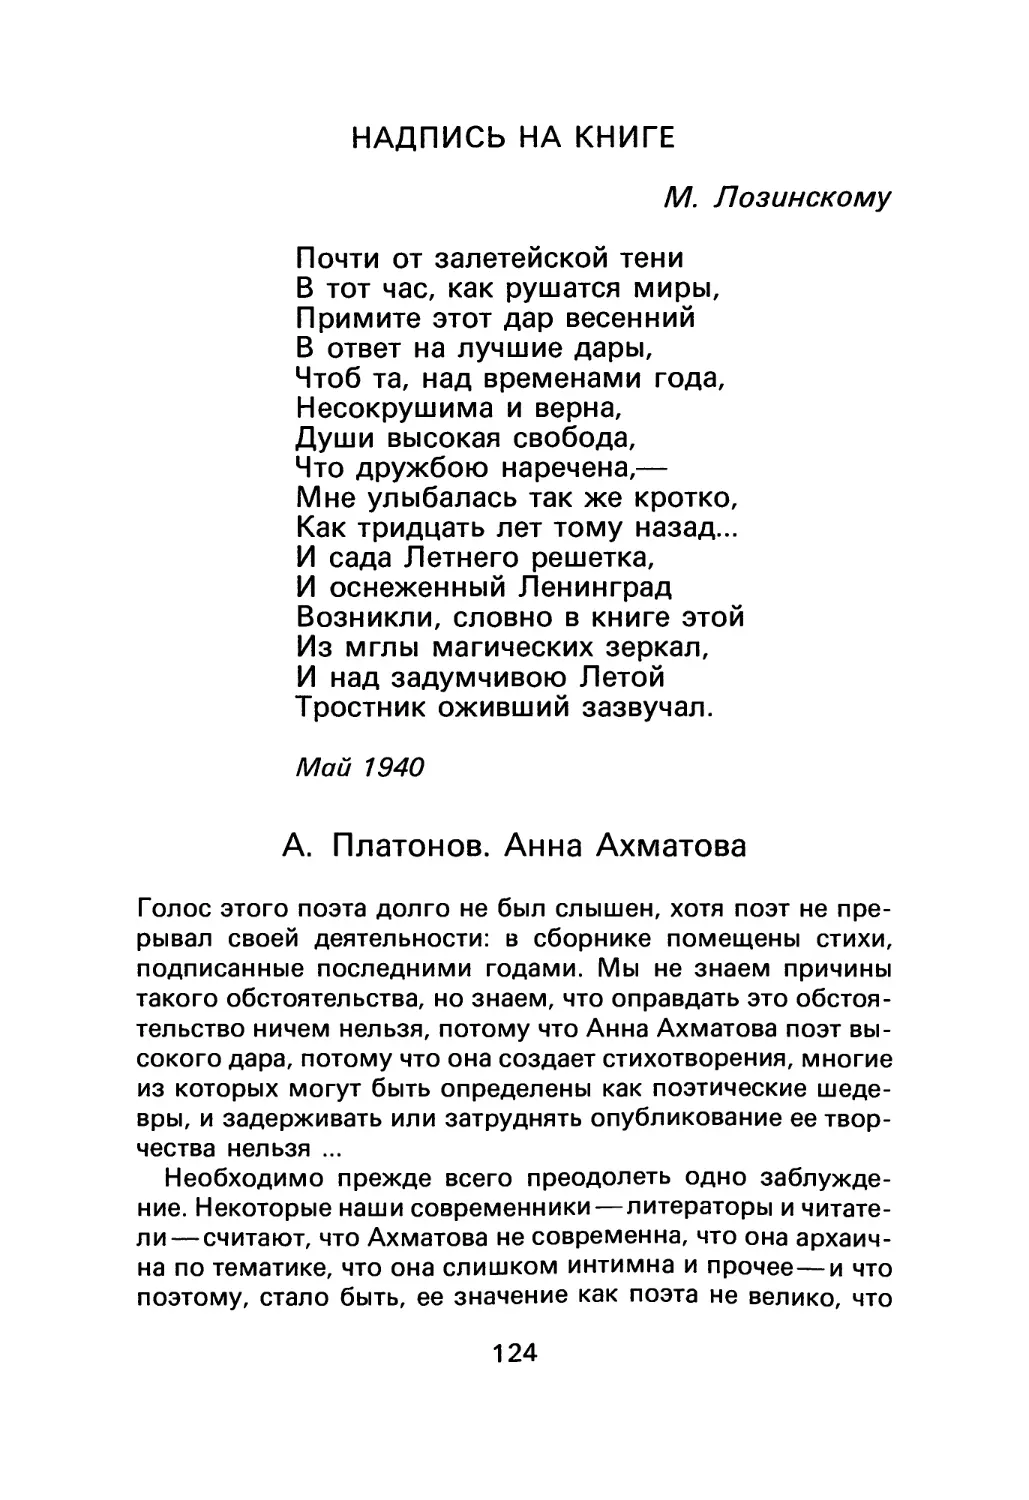 Надпись на книге
А. Платонов. Анна Ахматова